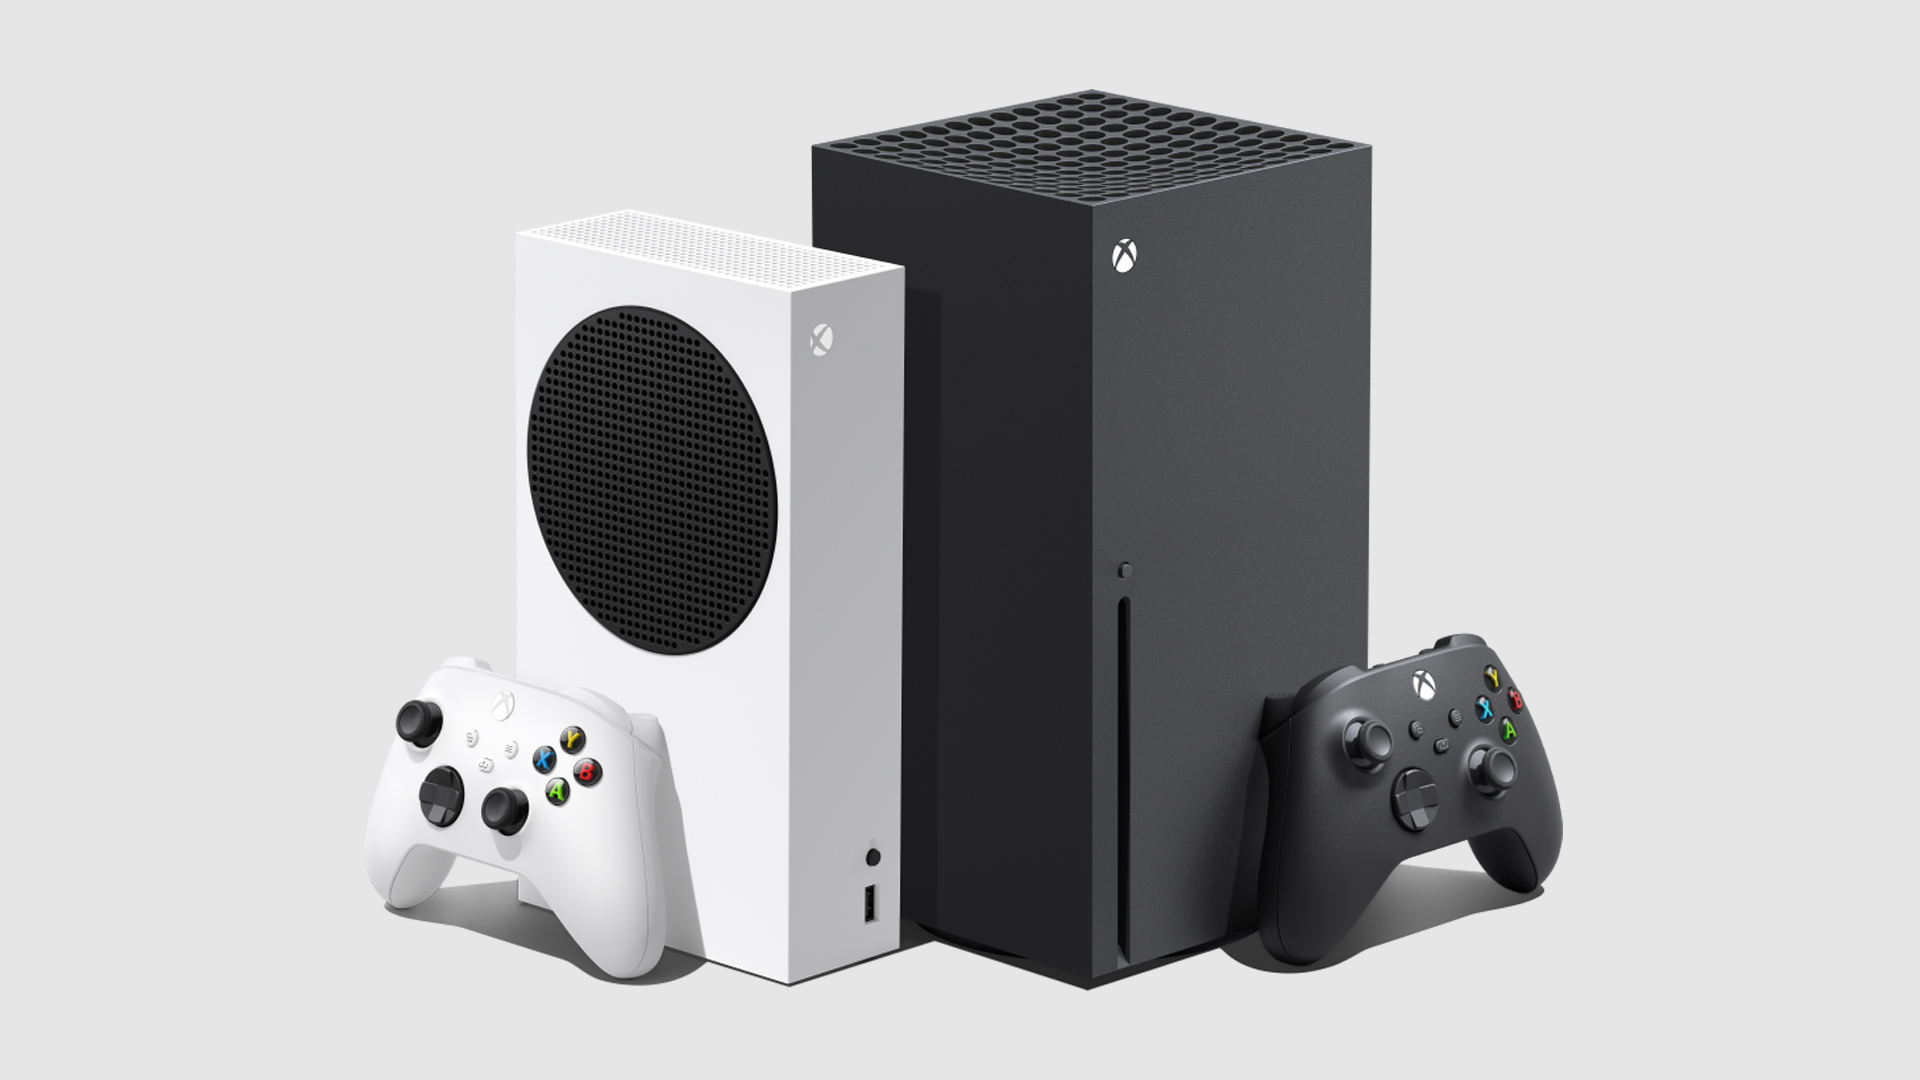 Xbox Series X/S ขายแซงหน้า PS5 ในยุโรปเมื่อเดือนกุมภาพันธ์ที่ผ่านมาจากการขาดสต็อกอย่างต่อเนื่องของเครื่องเกมจาก Sony